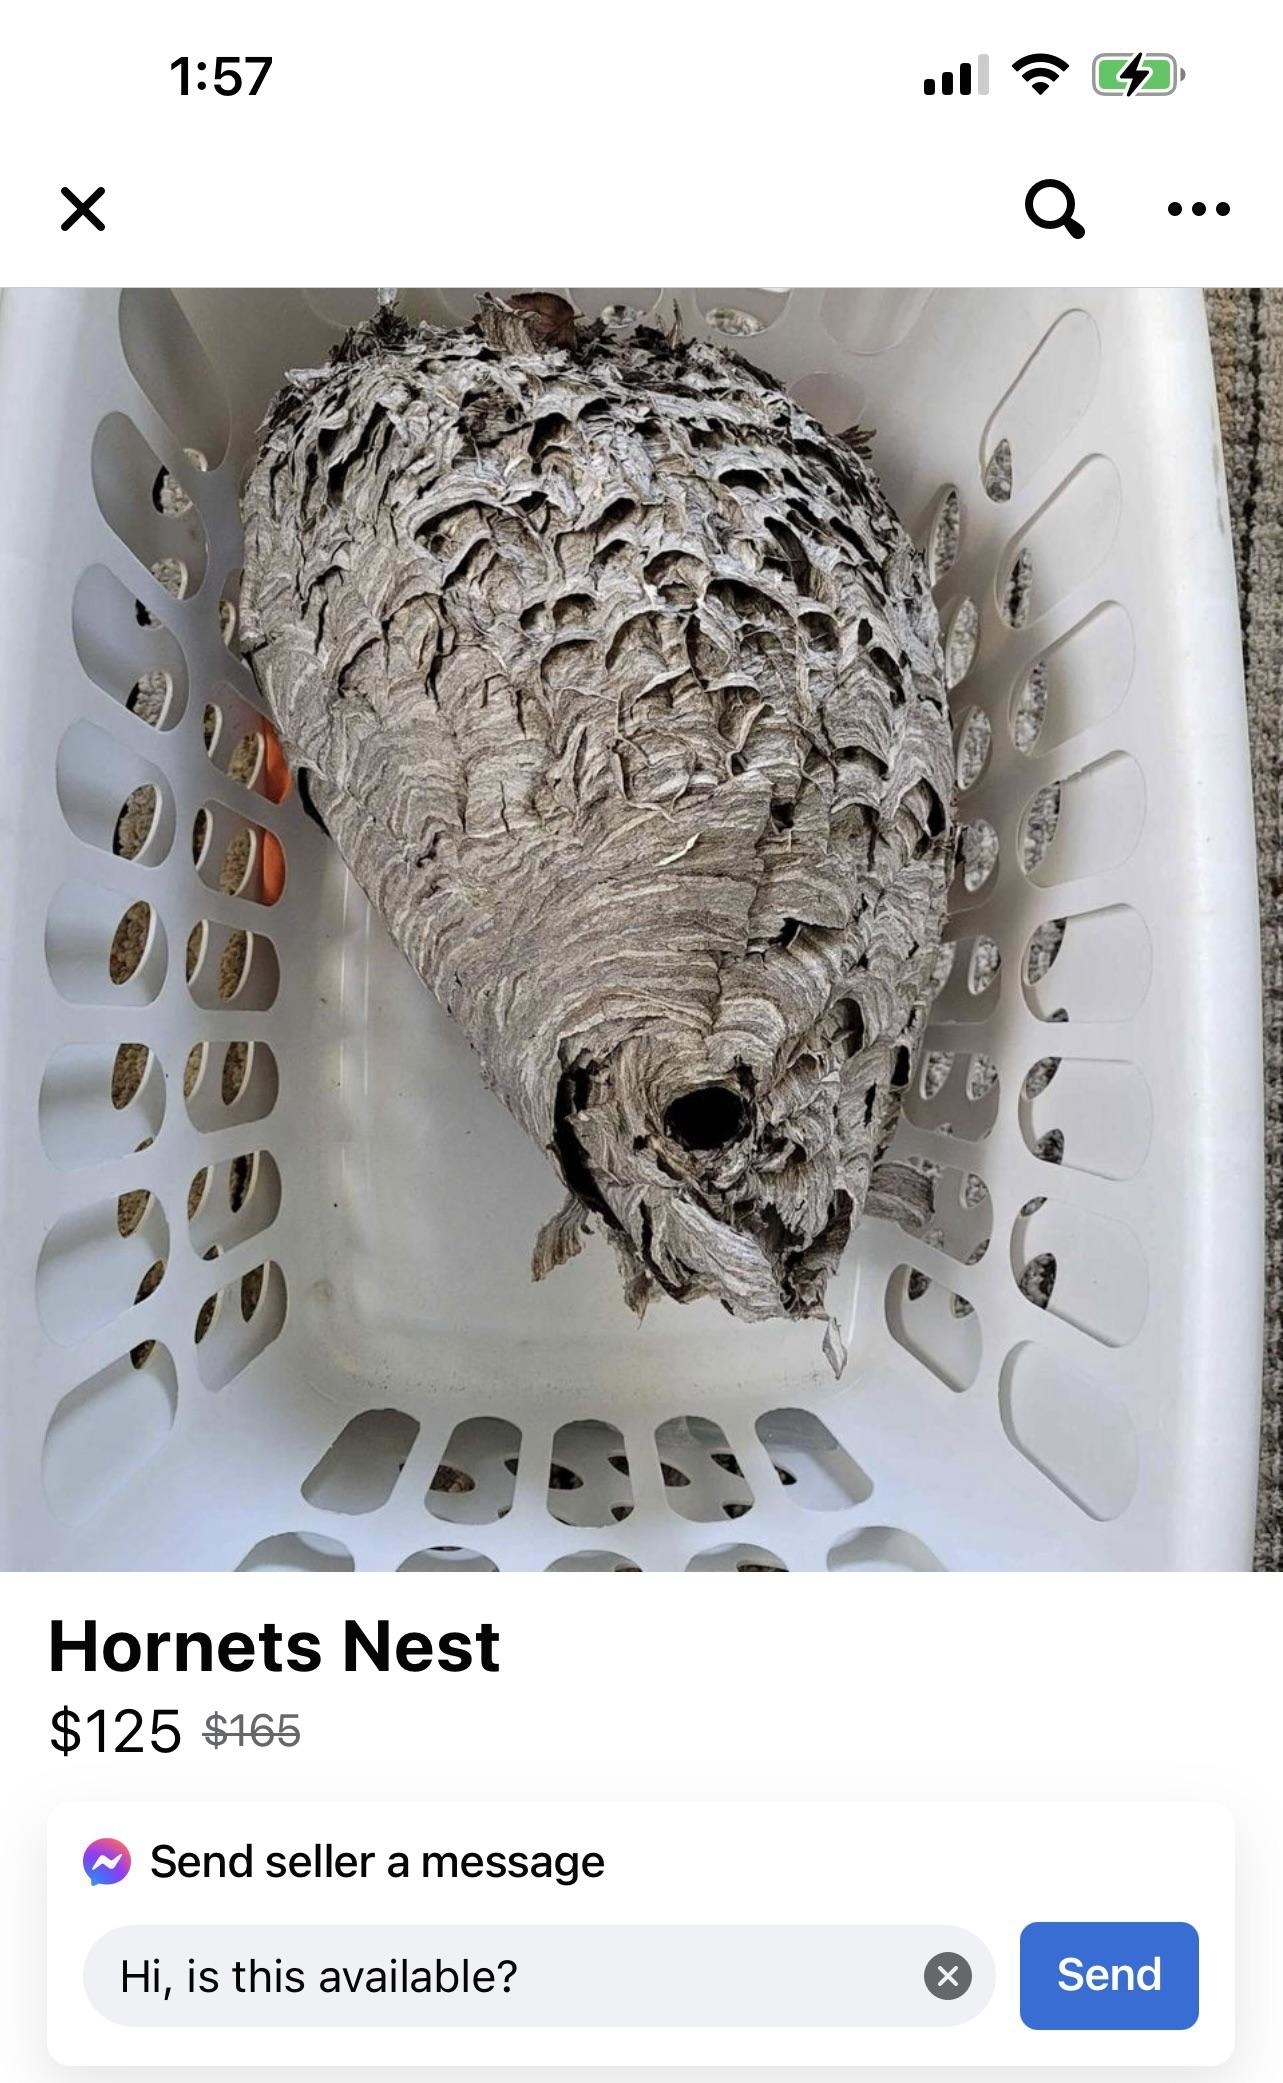 Large hornet&#x27;s nest inside a white plastic basket for sale for $125, originally $165, displayed on an online marketplace